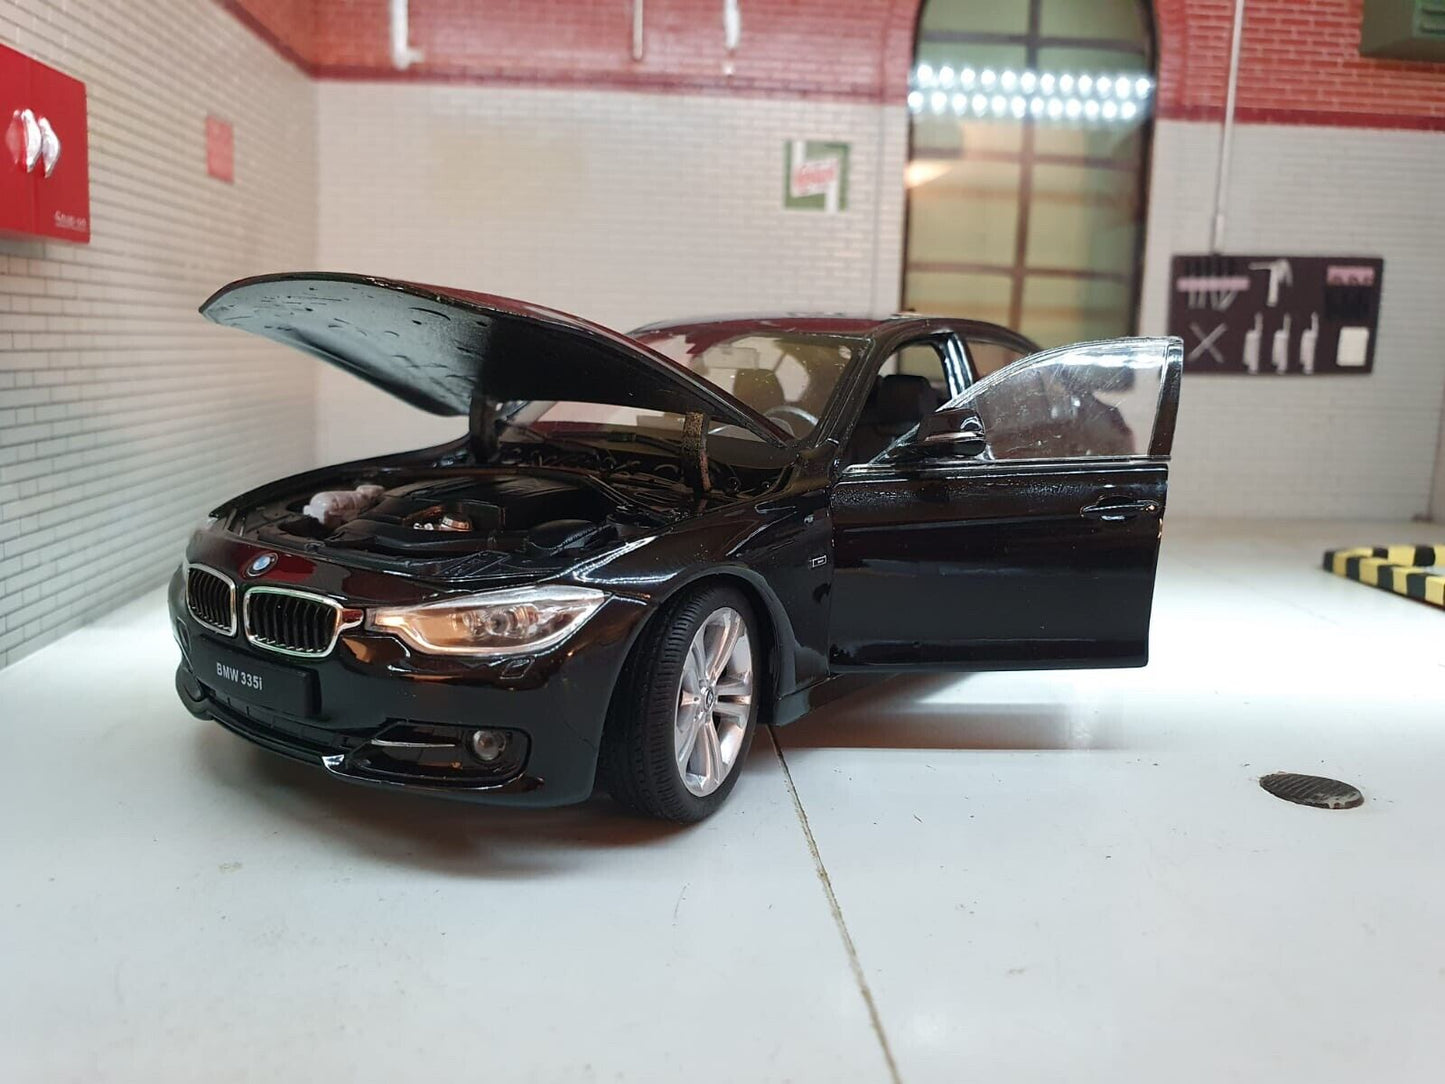 BMW 2015 3er 335i F30 24039 Welly 1:24